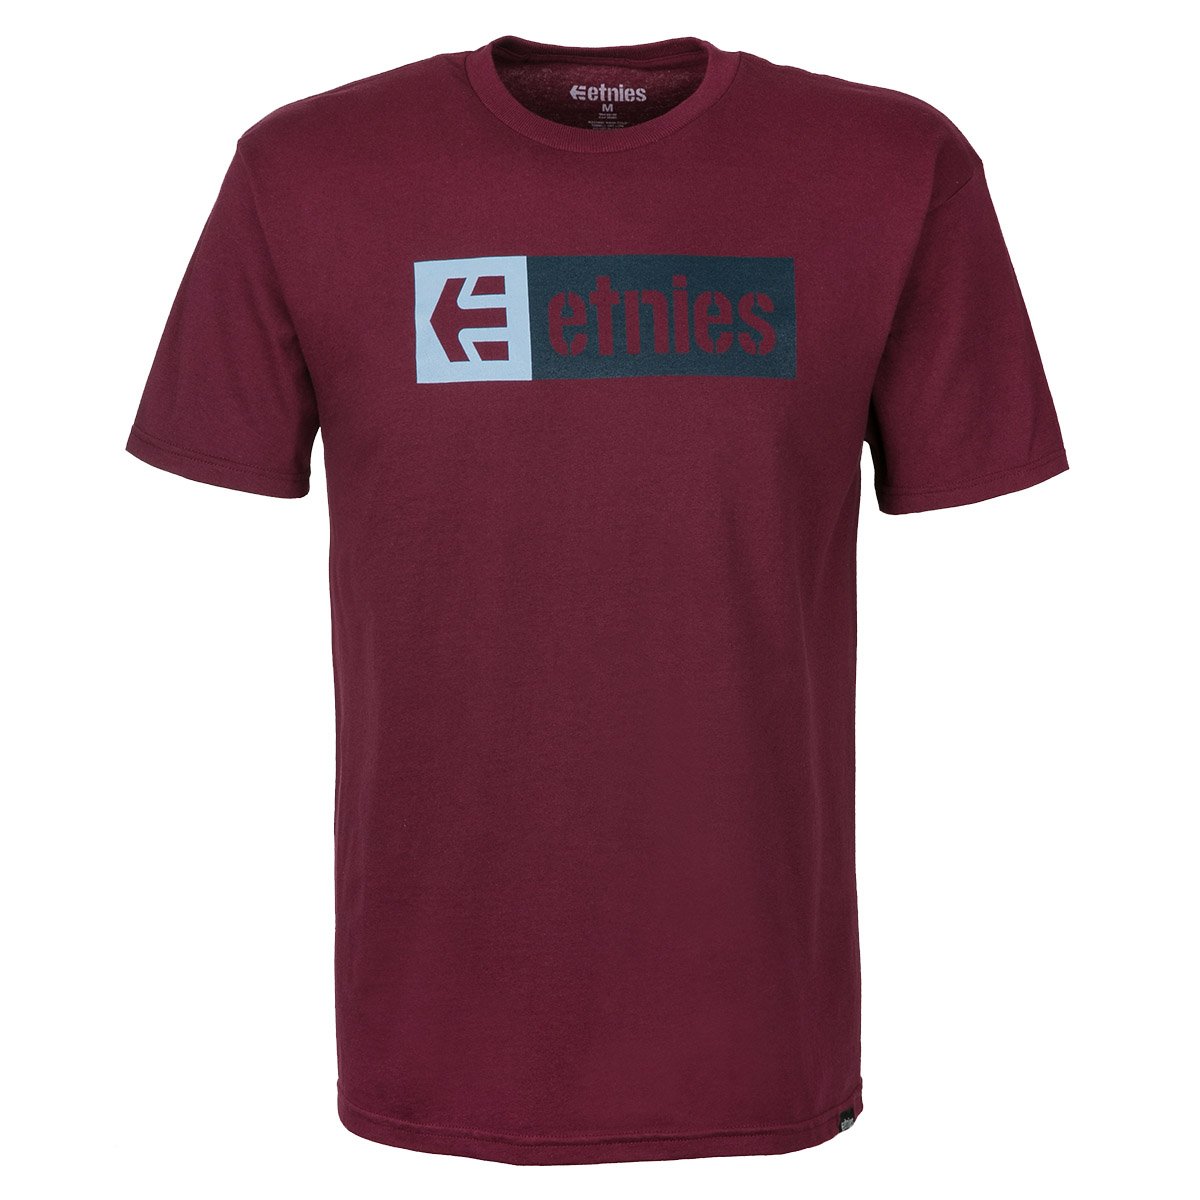 Etnies T-Shirt New Box Burgundy